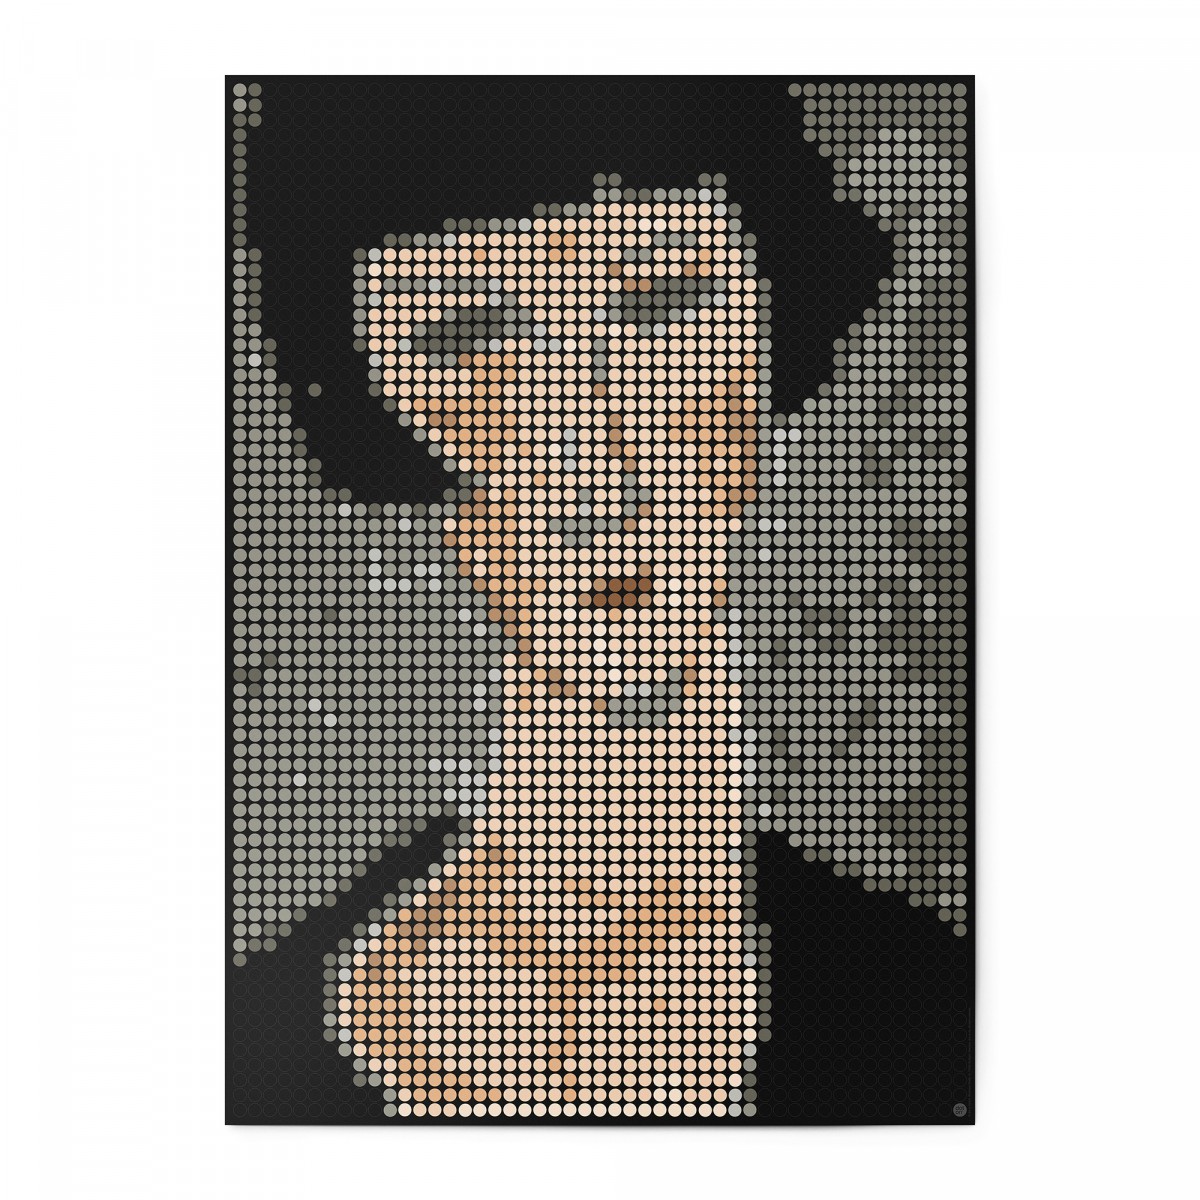 dot on Pixelart / DIY-Kunstwerk mit Klebepunkten / modigliani 50x70 cm